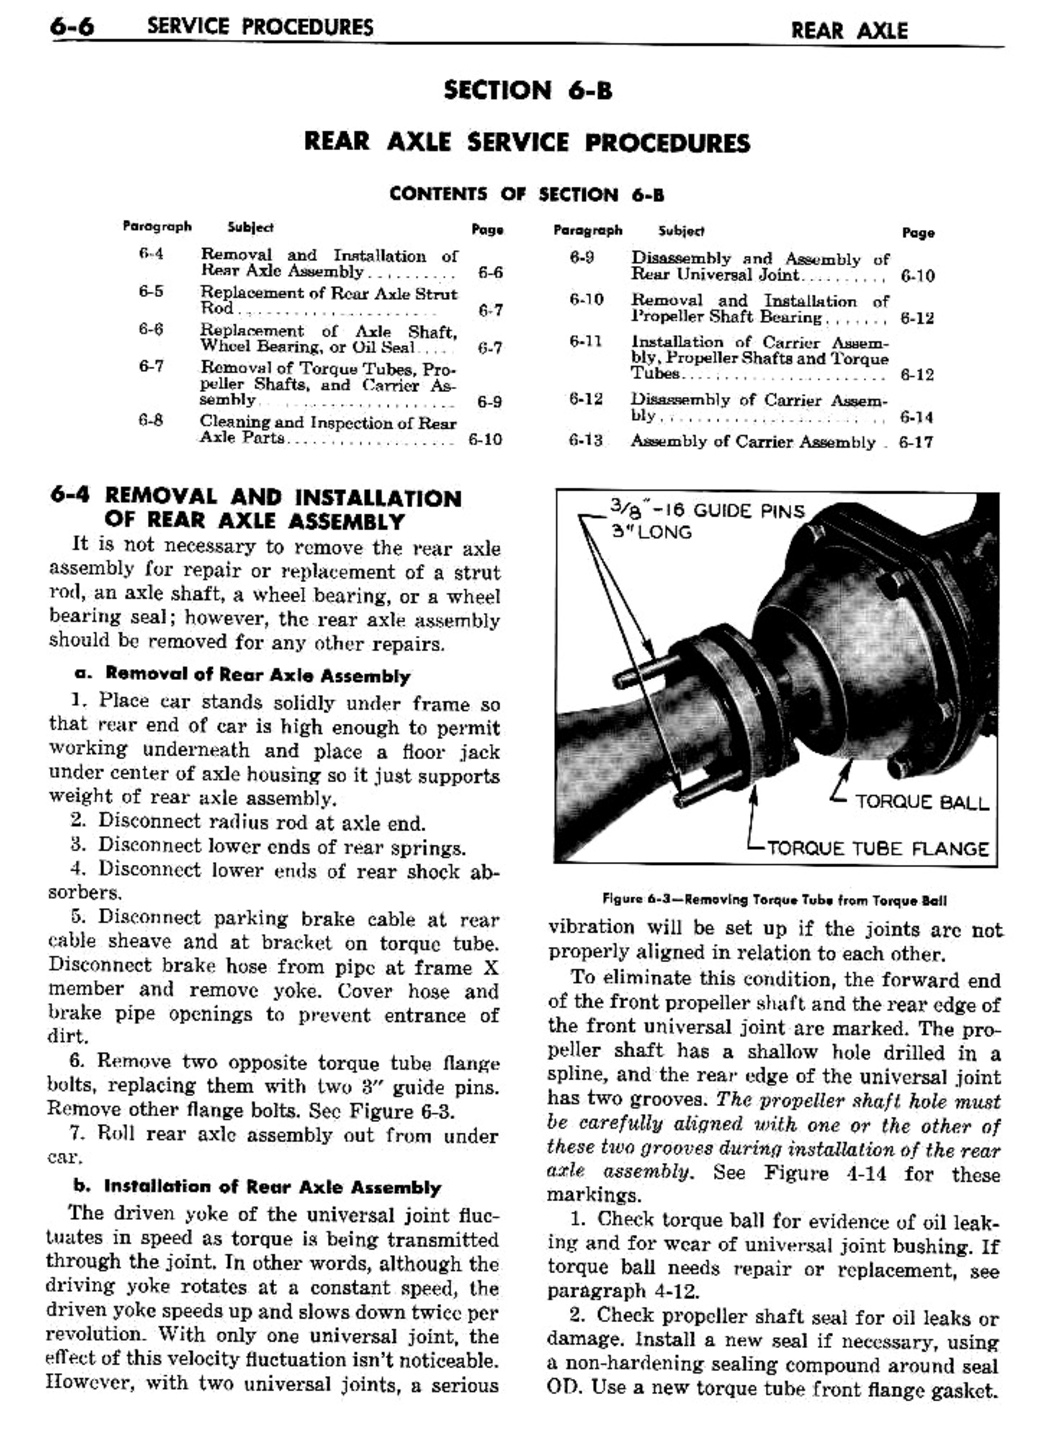 n_07 1957 Buick Shop Manual - Rear Axle-006-006.jpg